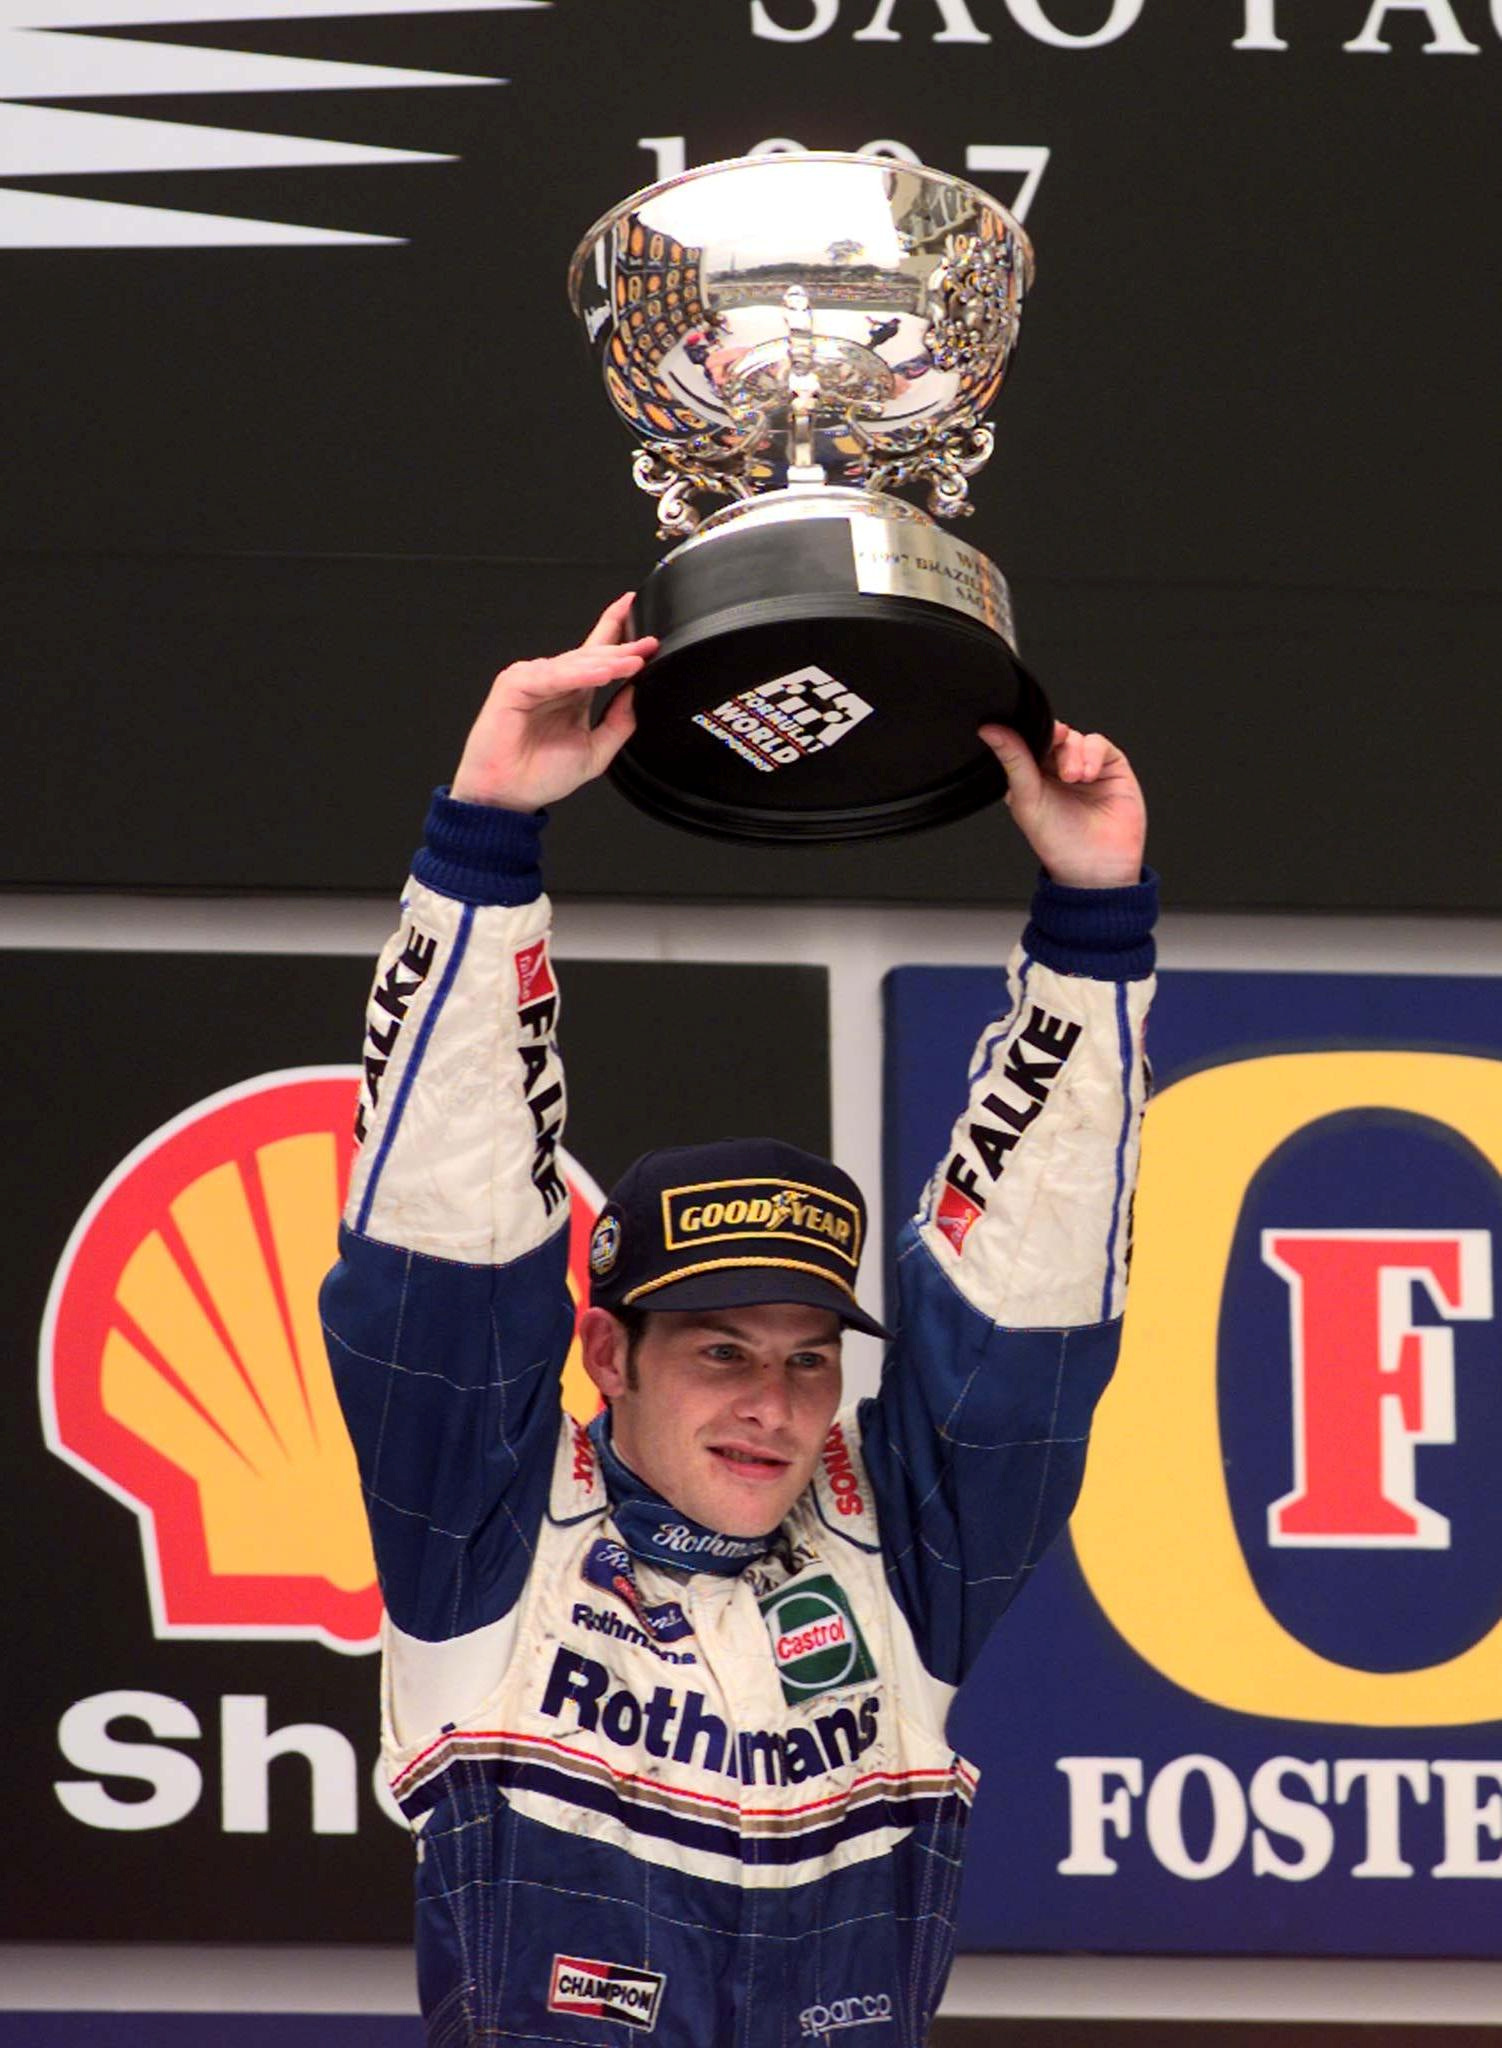 Jacques Villeneuve fue campeón mundial con 26 años y derrotó a Michael Schumacher (REUTERS/Enrique Marcarian/File Photo)